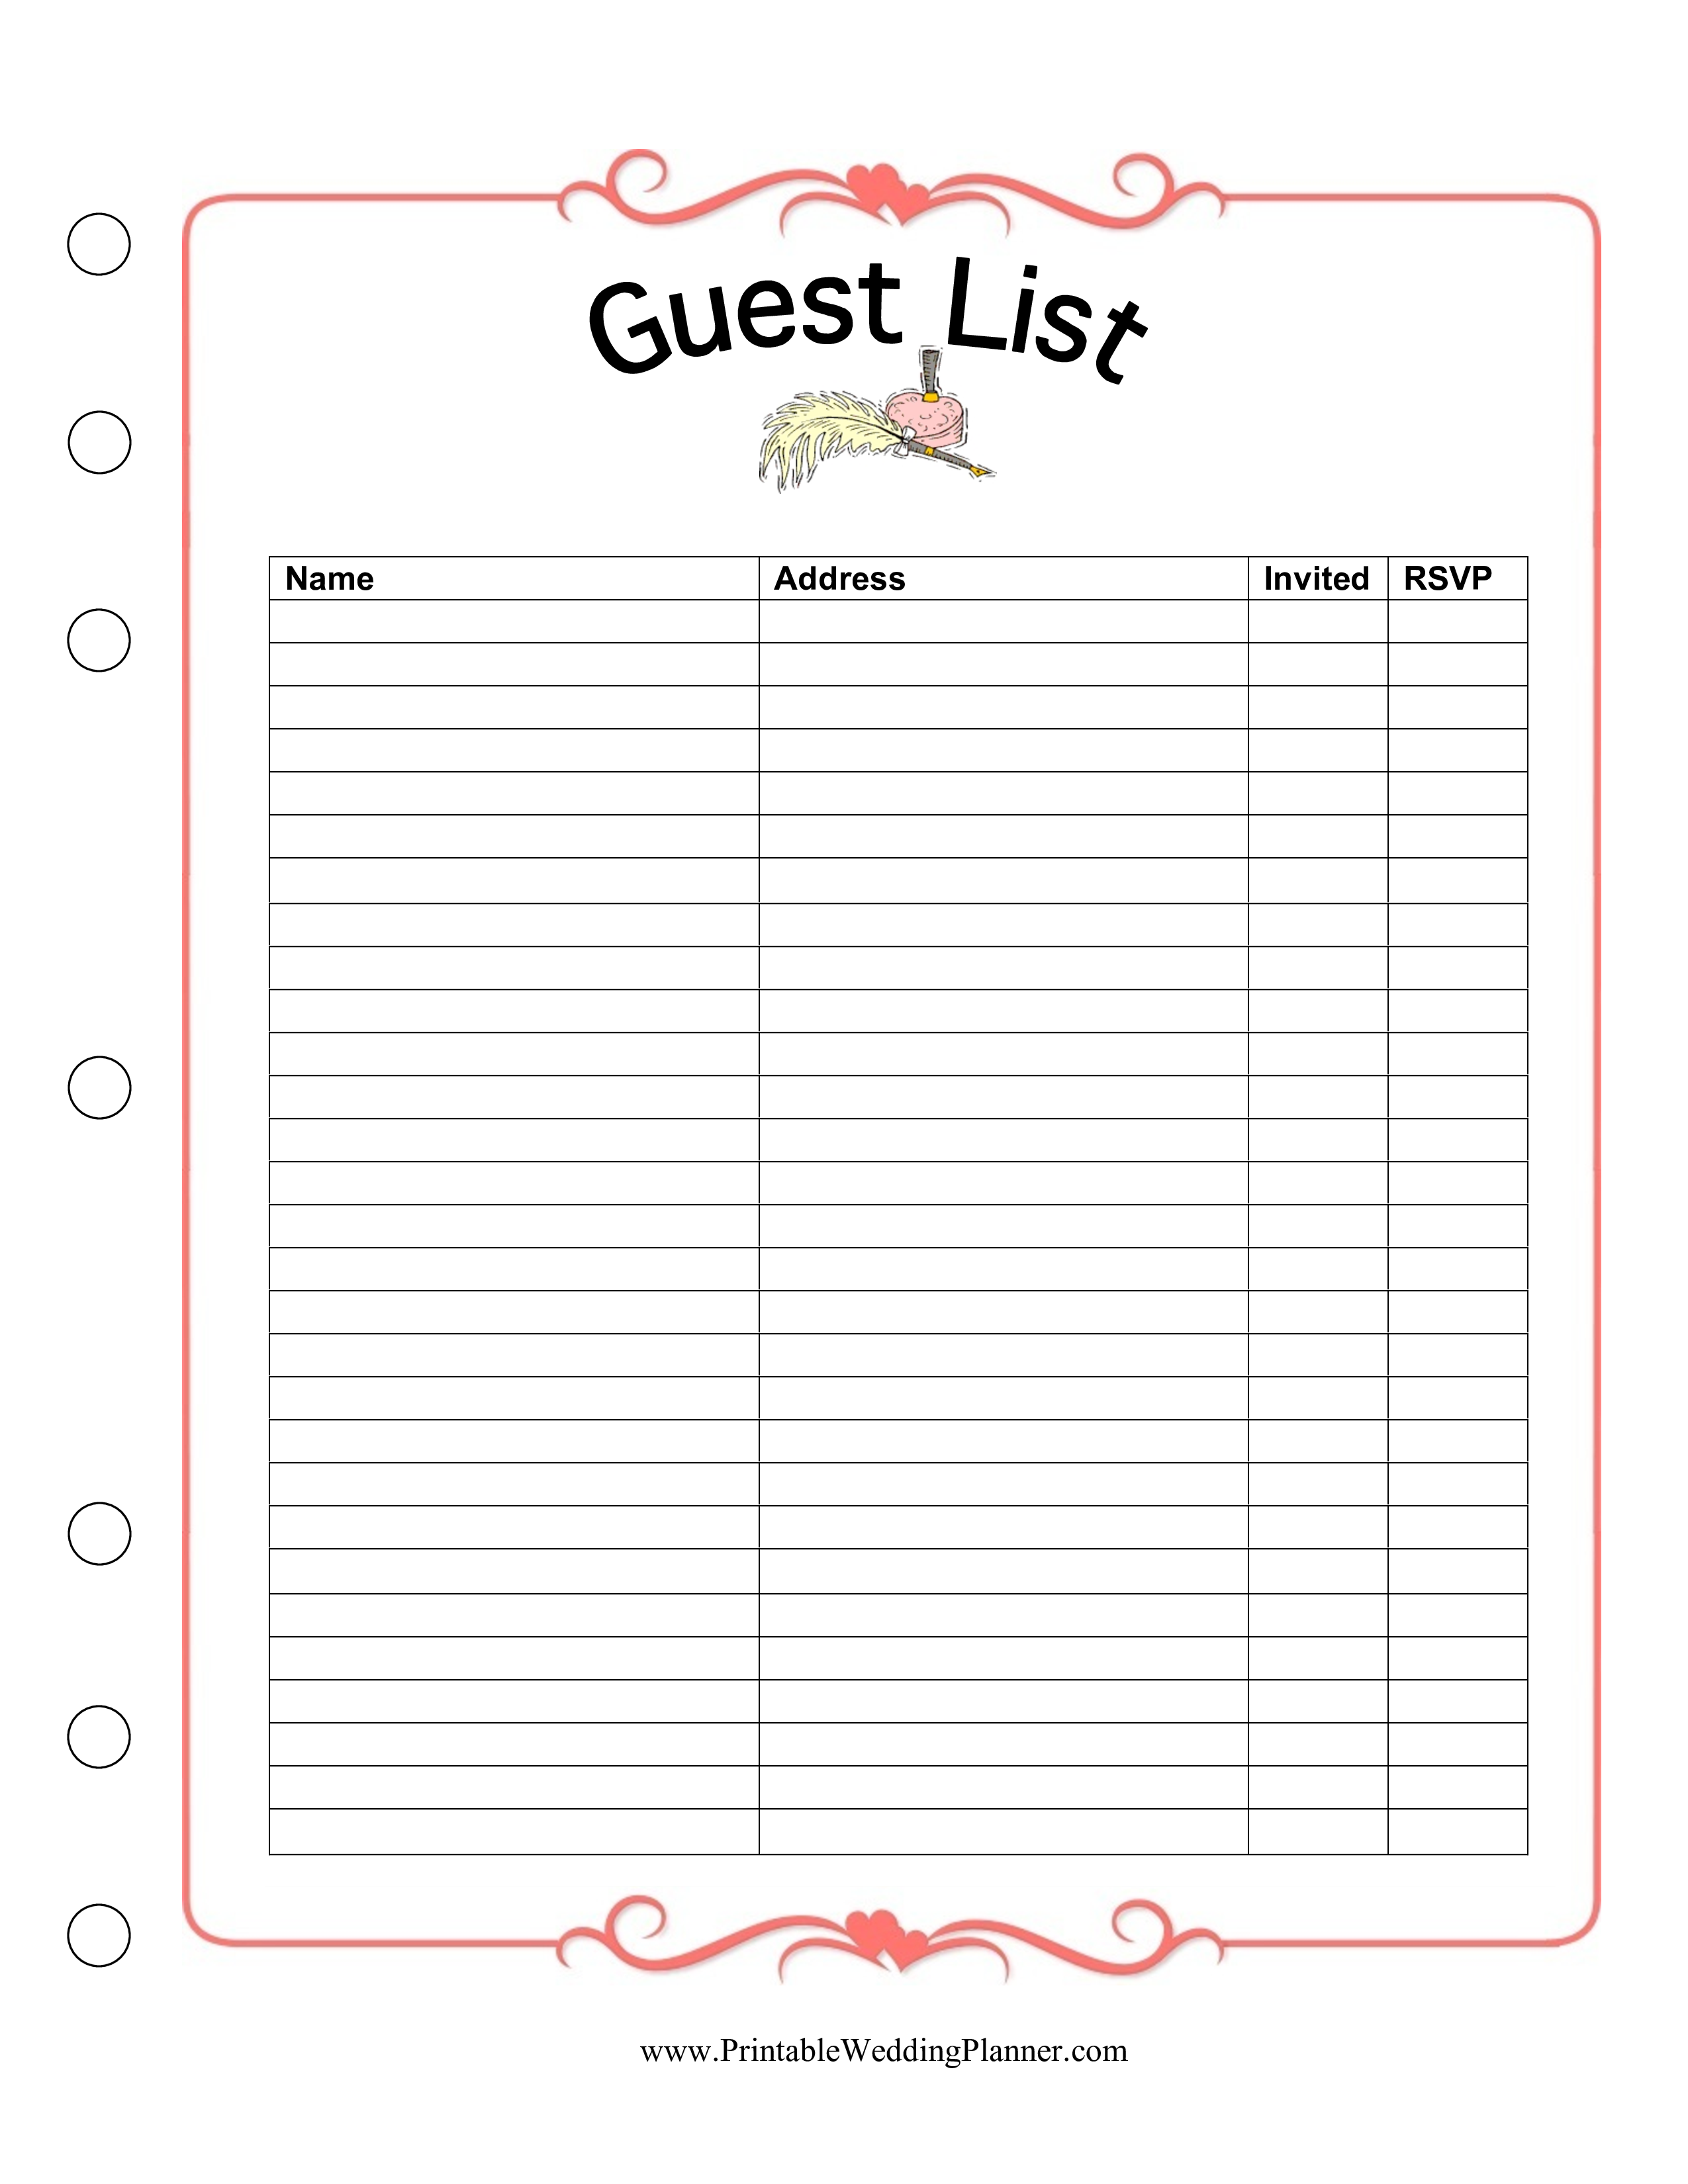 wedding-guest-list-spreadsheet-templates-at-allbusinesstemplates